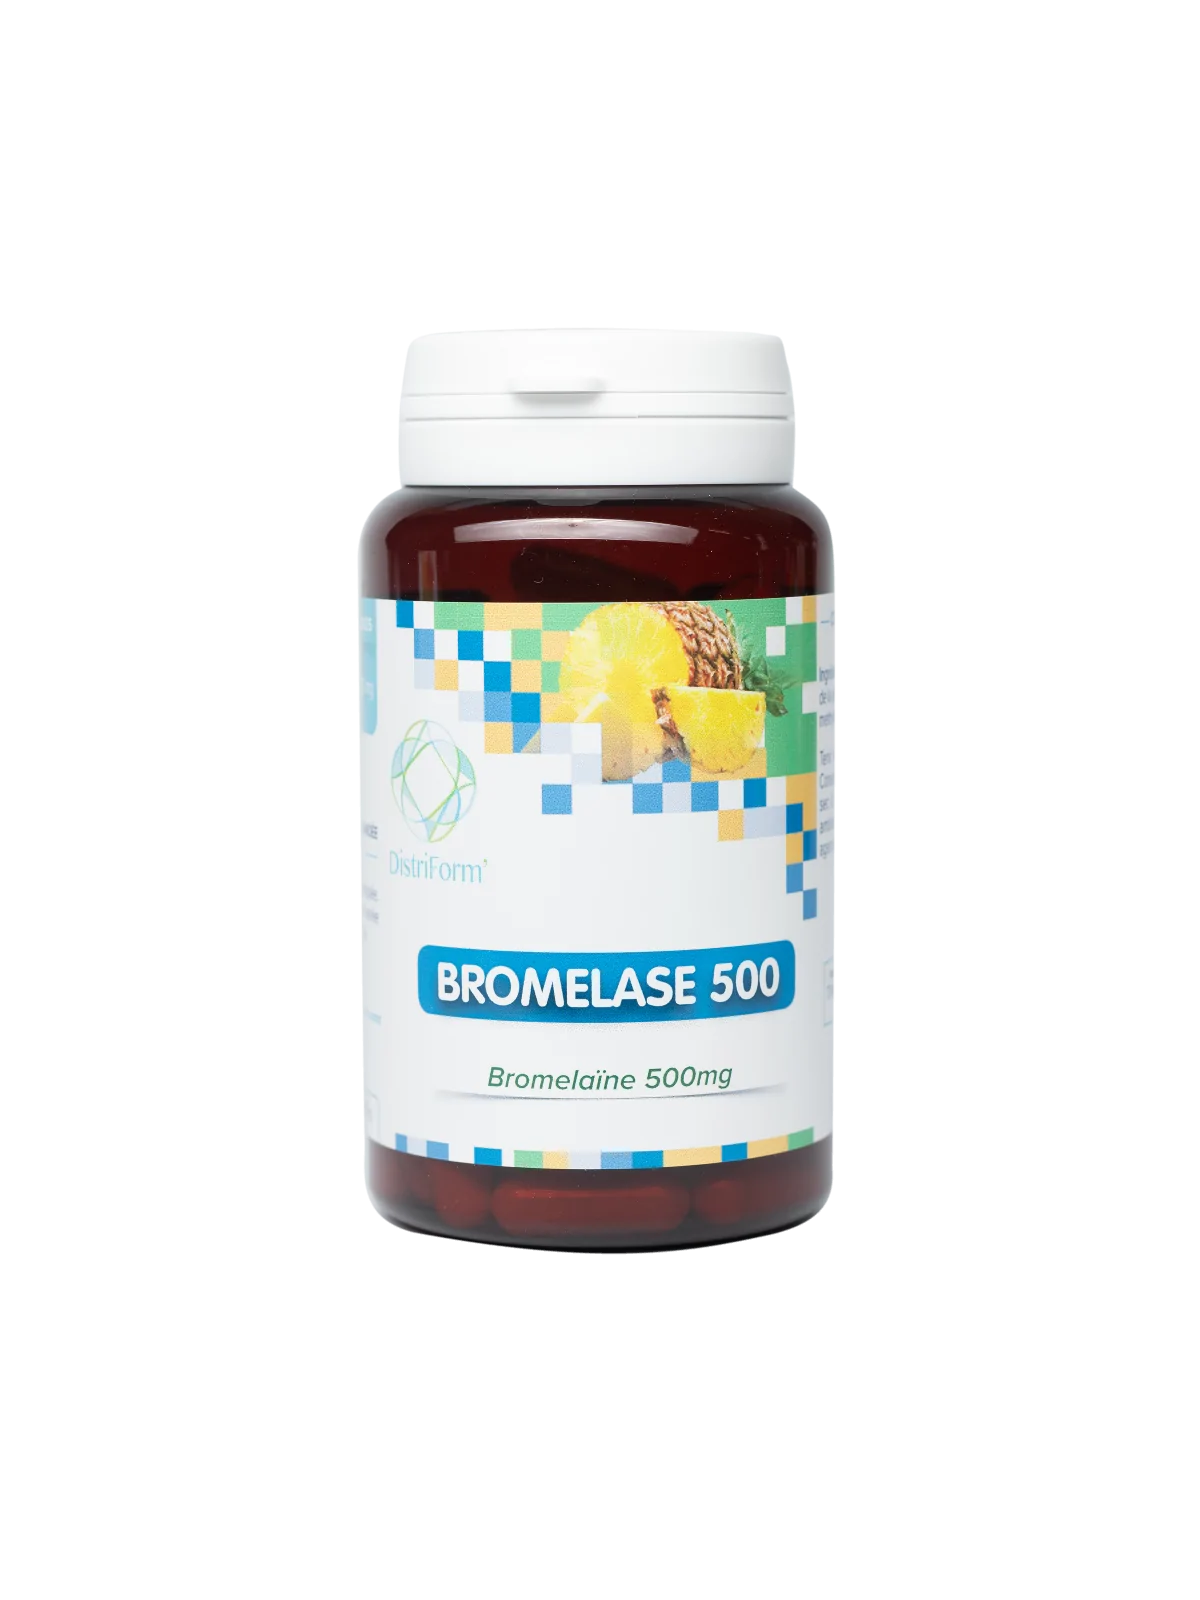 BROMELASE 500mg Inflammation - Distriform'